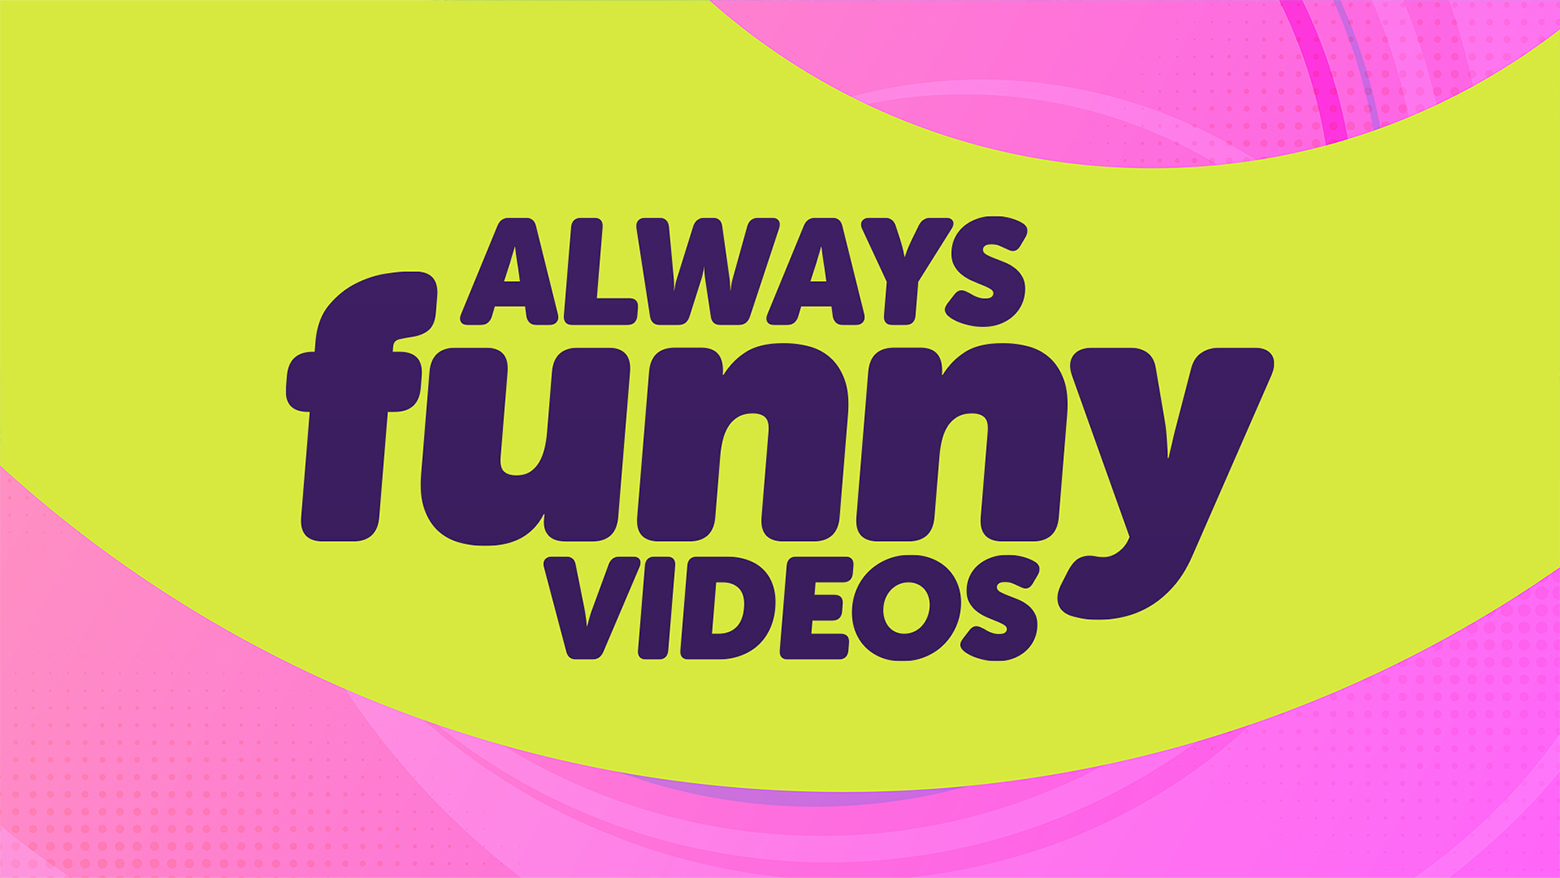 Funny Videos; Funny short vide - Apps on Google Play